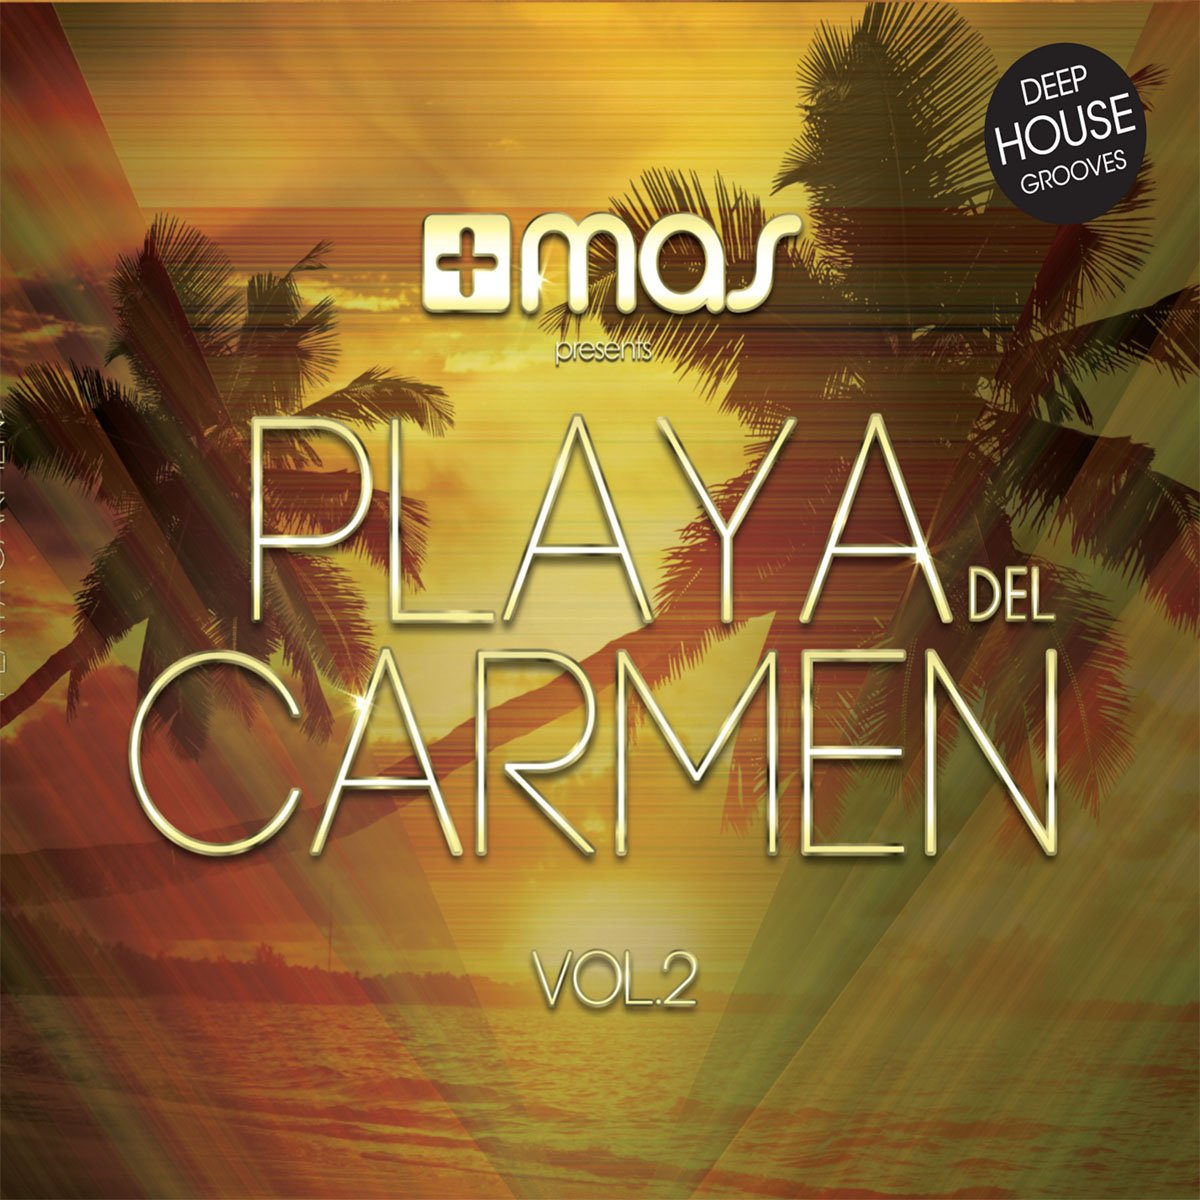 2Cds Varios Playa Del Carmen Vol. 2